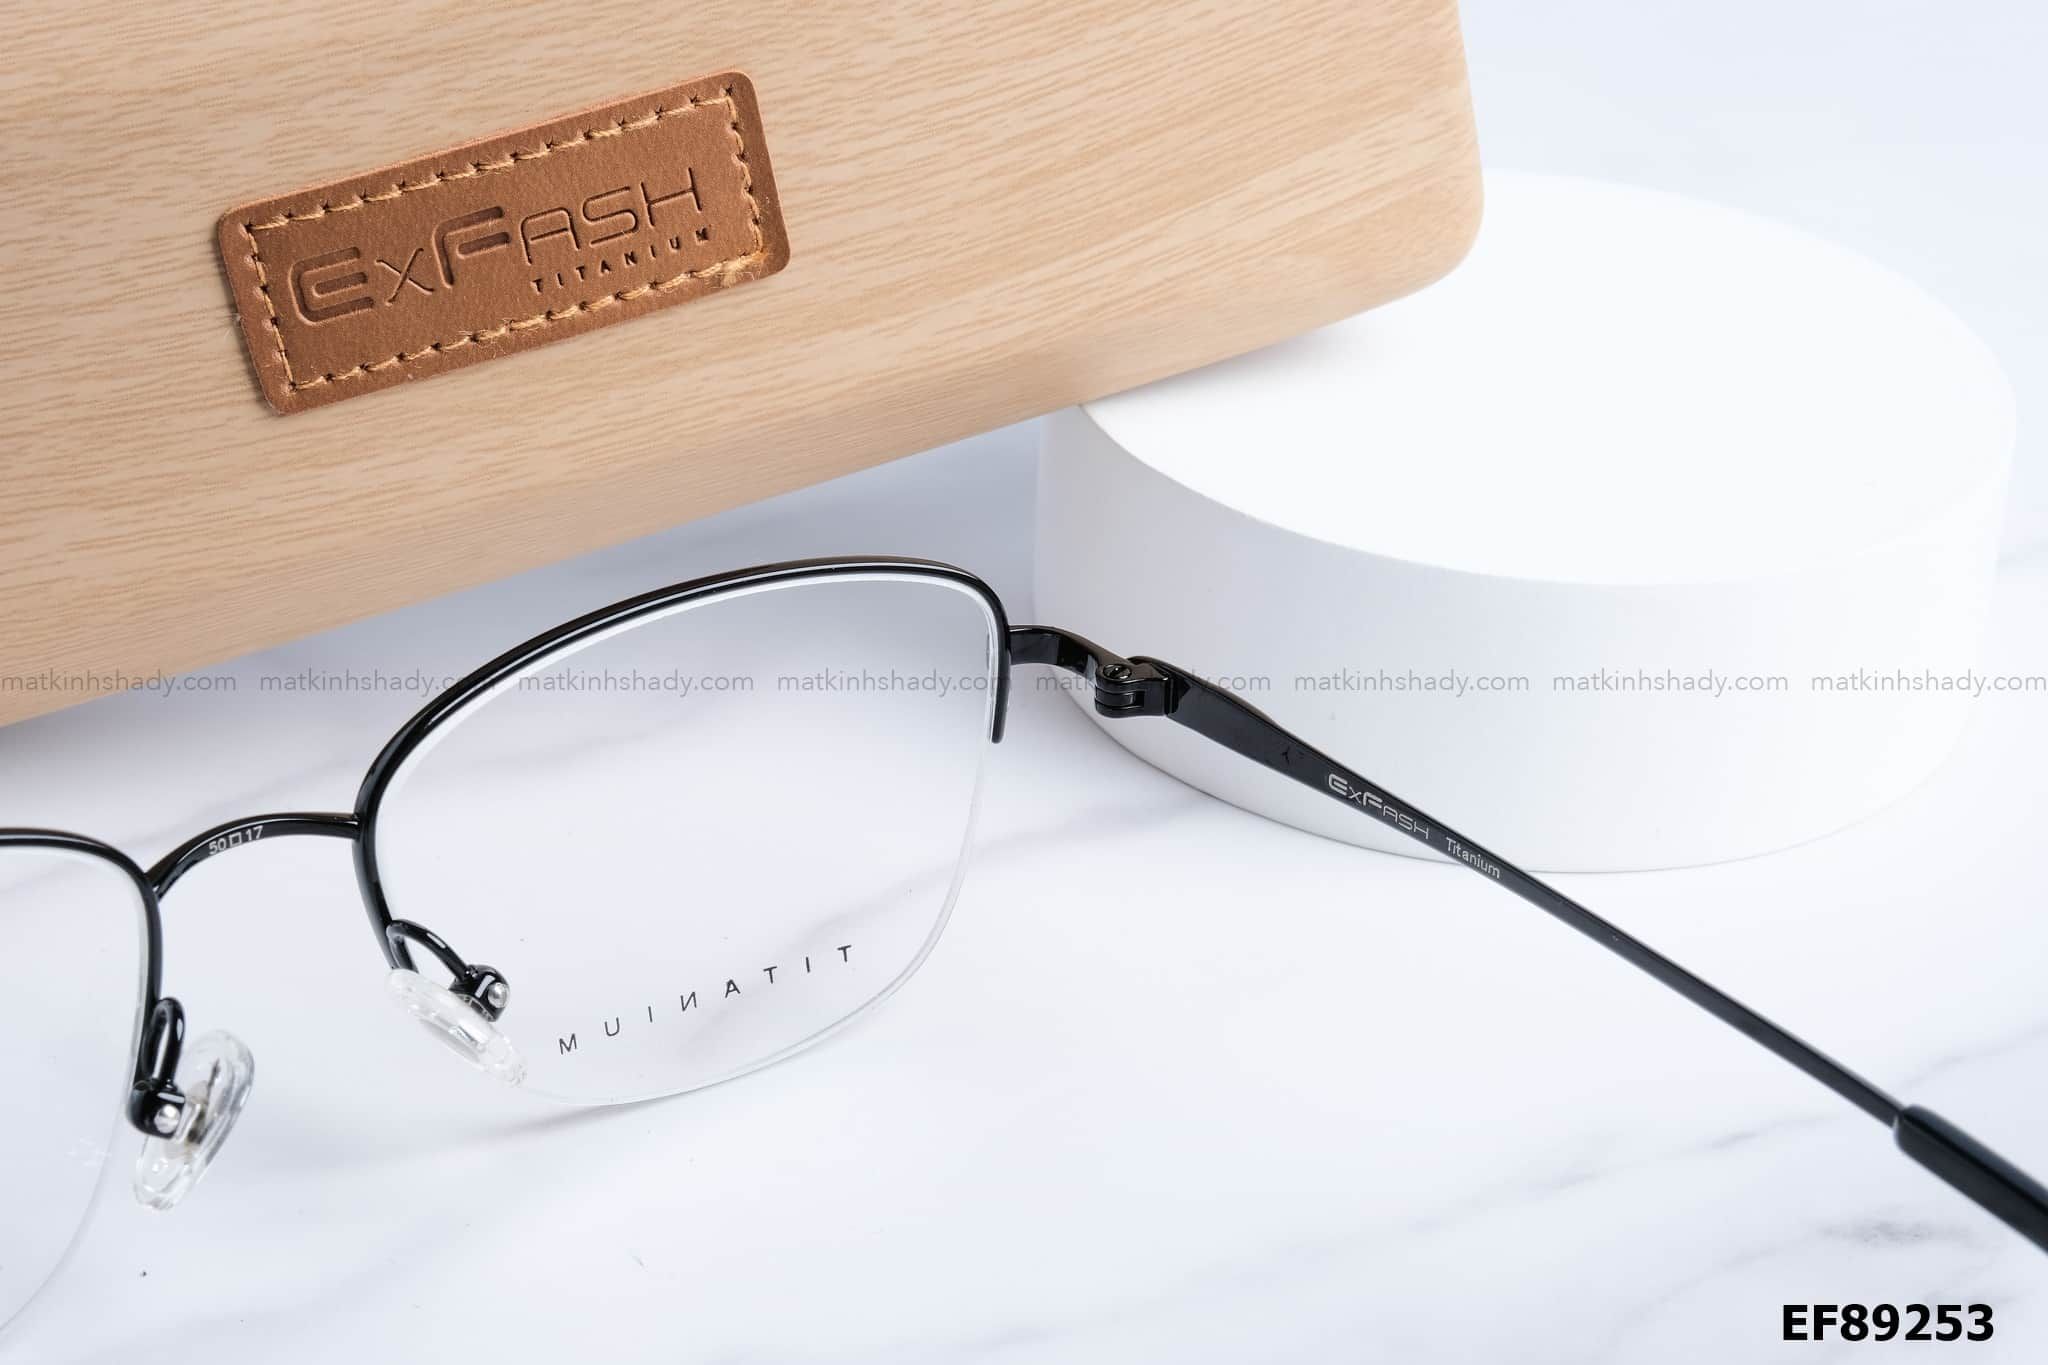  Exfash Eyewear - Glasses - EF89253 